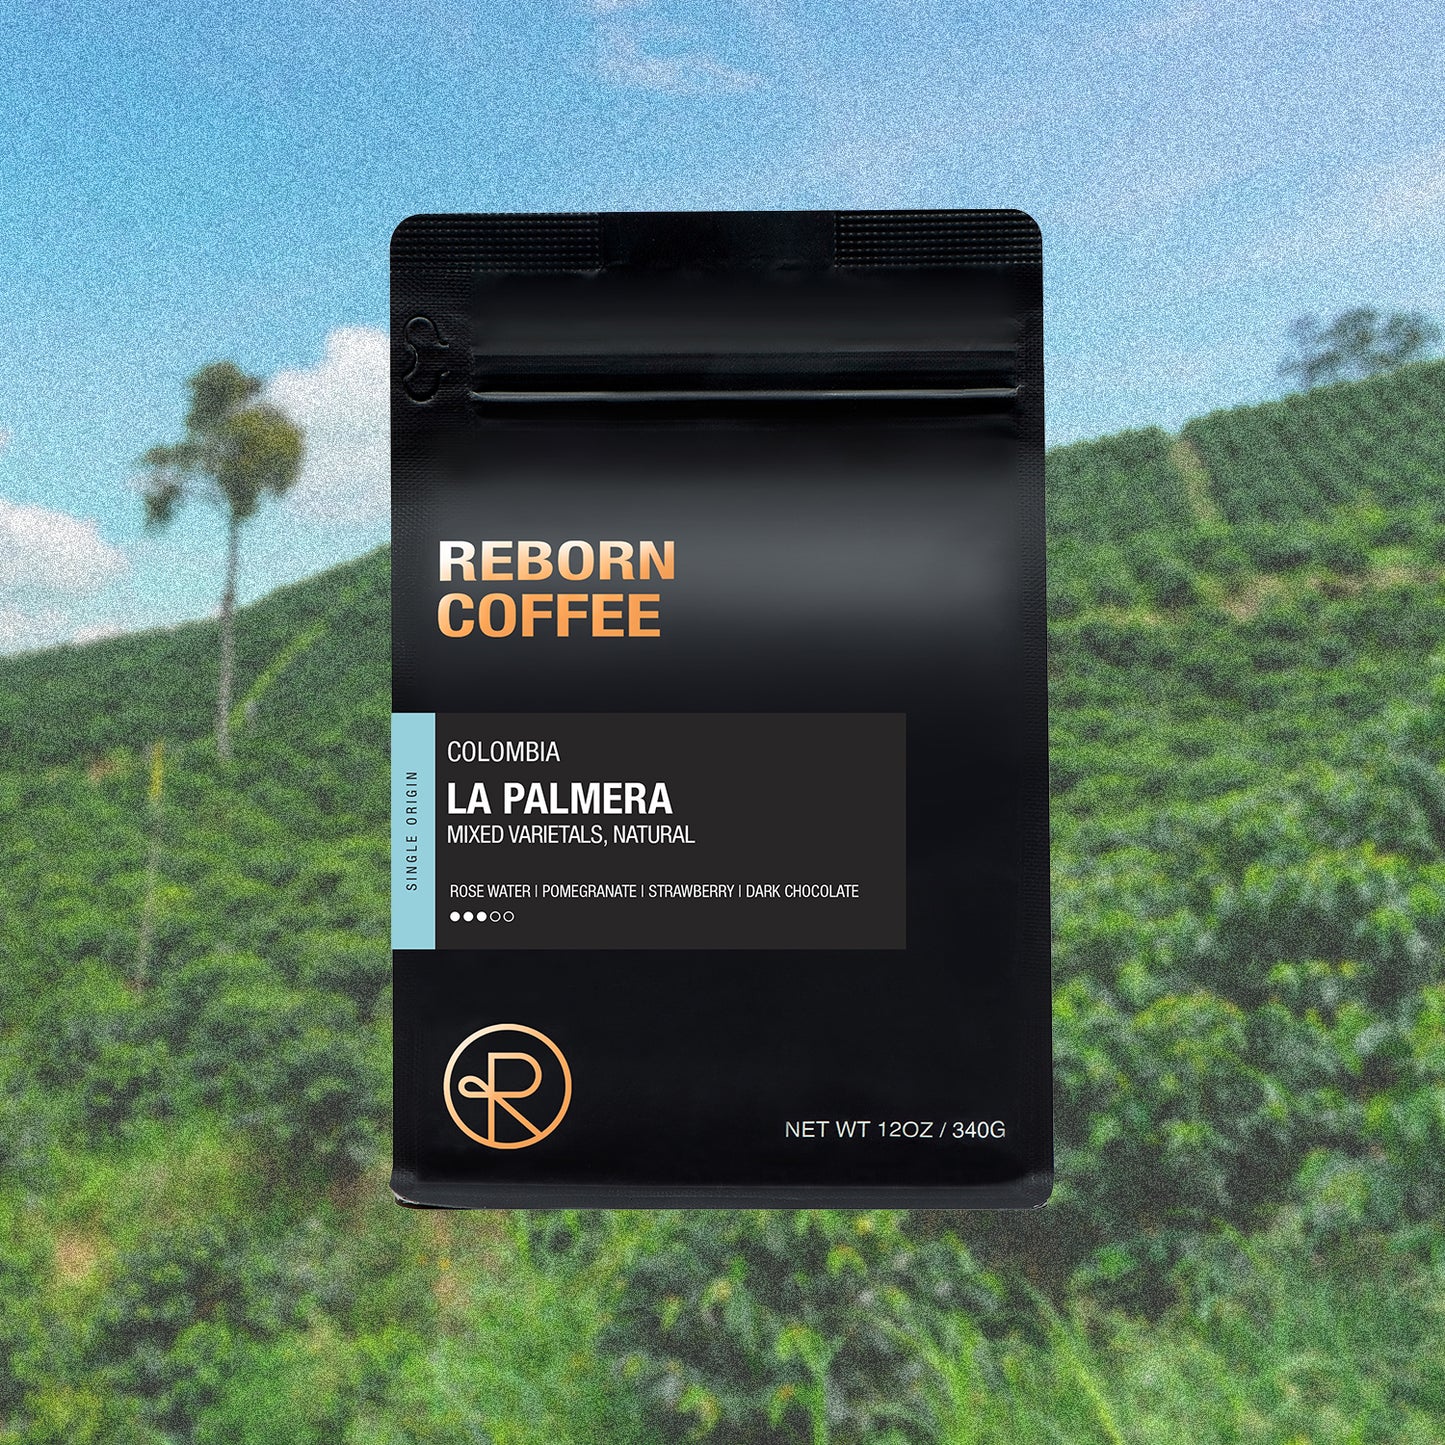 12oz bag of Colombia, La Palmera single origin Reborn Coffee whole beans